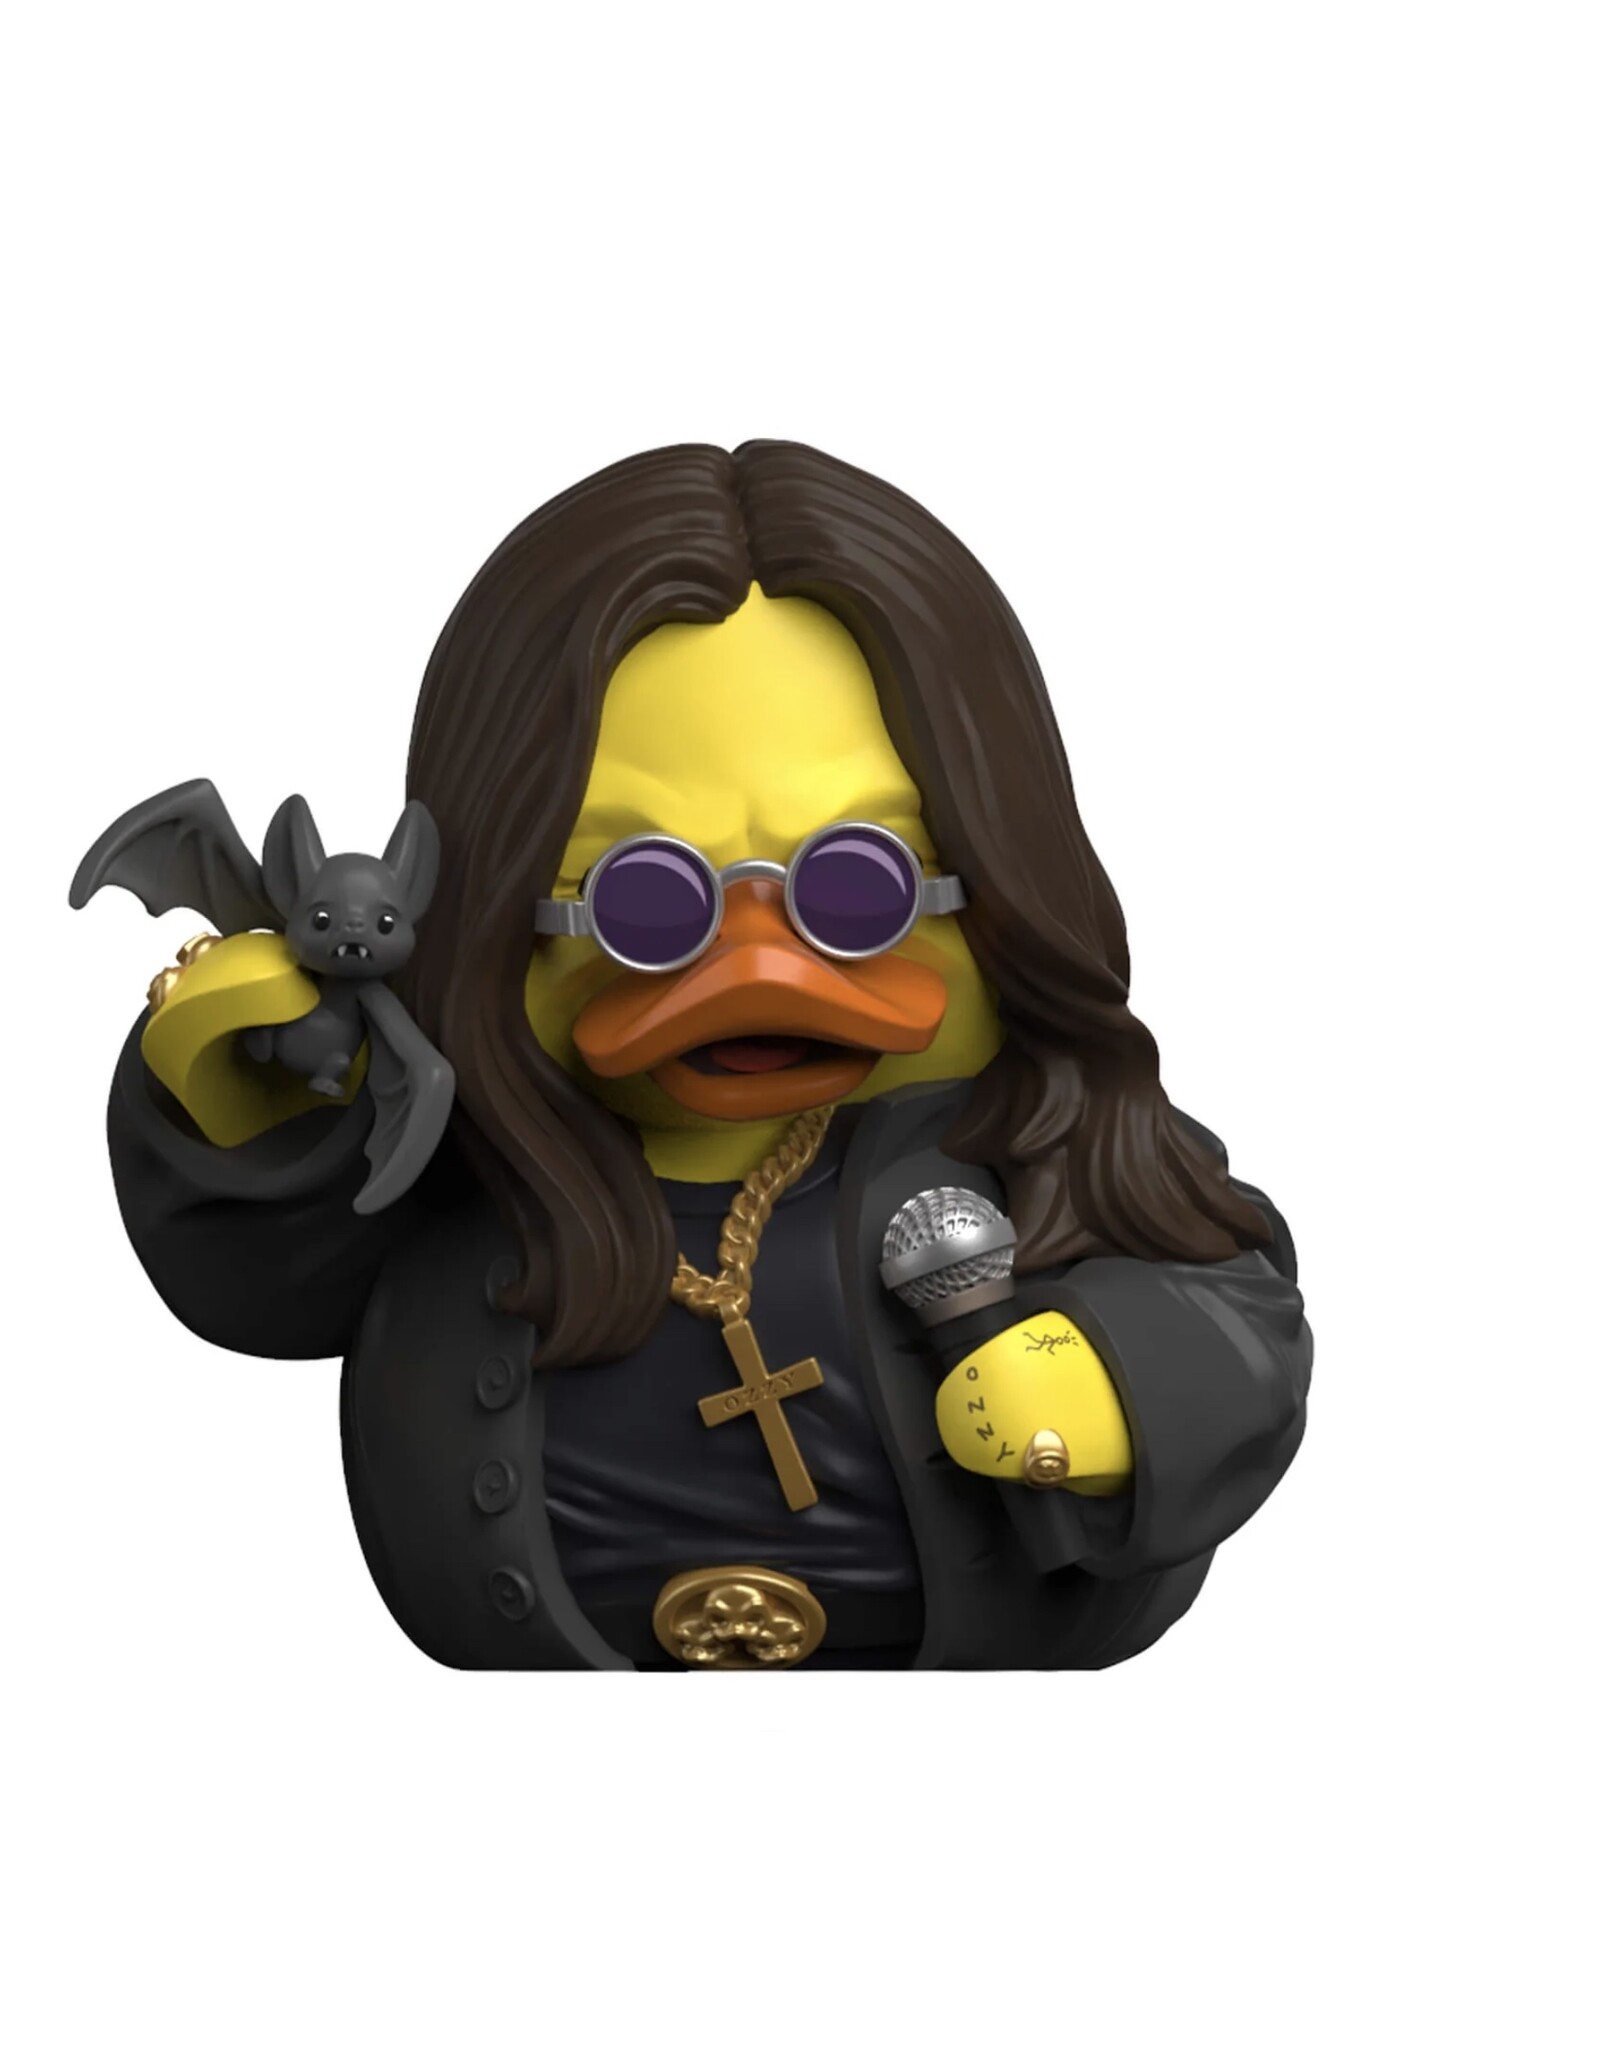 Tubbz Ozzy Osbourne Tubbz Rubber Duck  - Boxed Edition